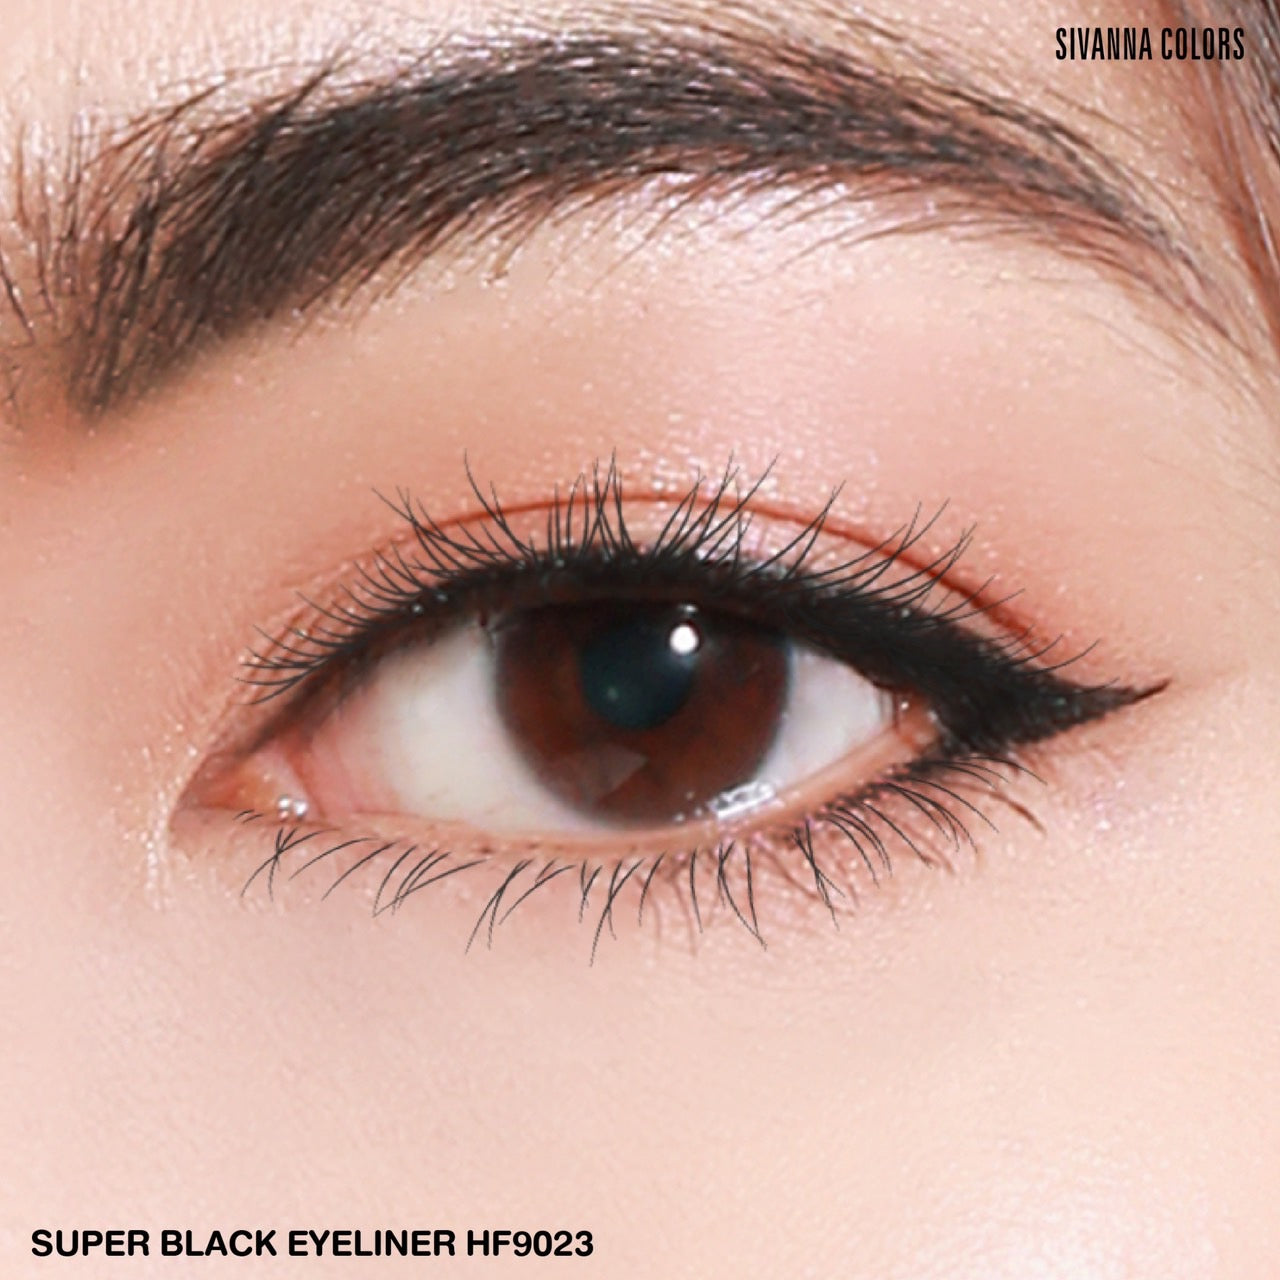 Sivanna Super Black Eyeliner #HF9023 : ซิวานน่า ซุปเปอร์ แบล็ค อายไลเนอร์